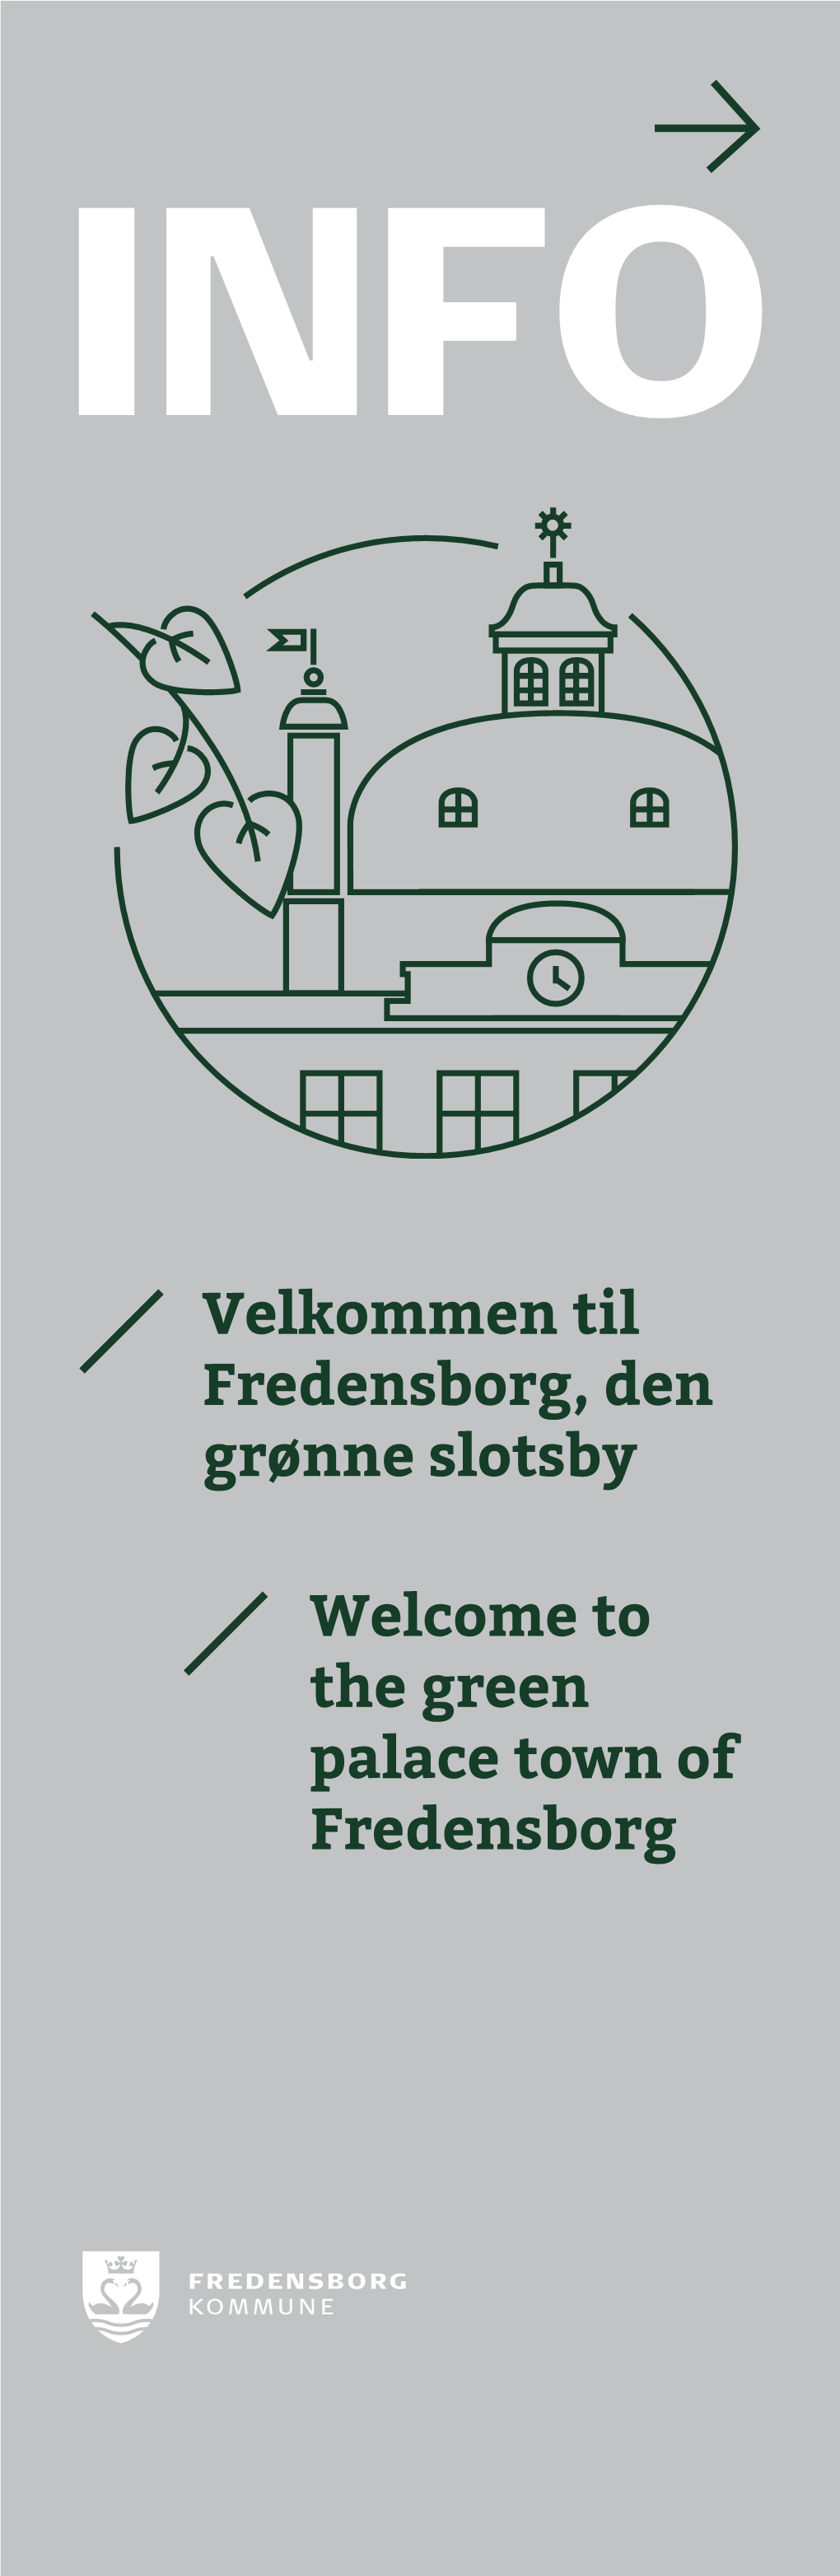 Welcome to the Green Palace Town of Fredensborg Velkommen Til Fredensborg, Den Grønne Slotsby